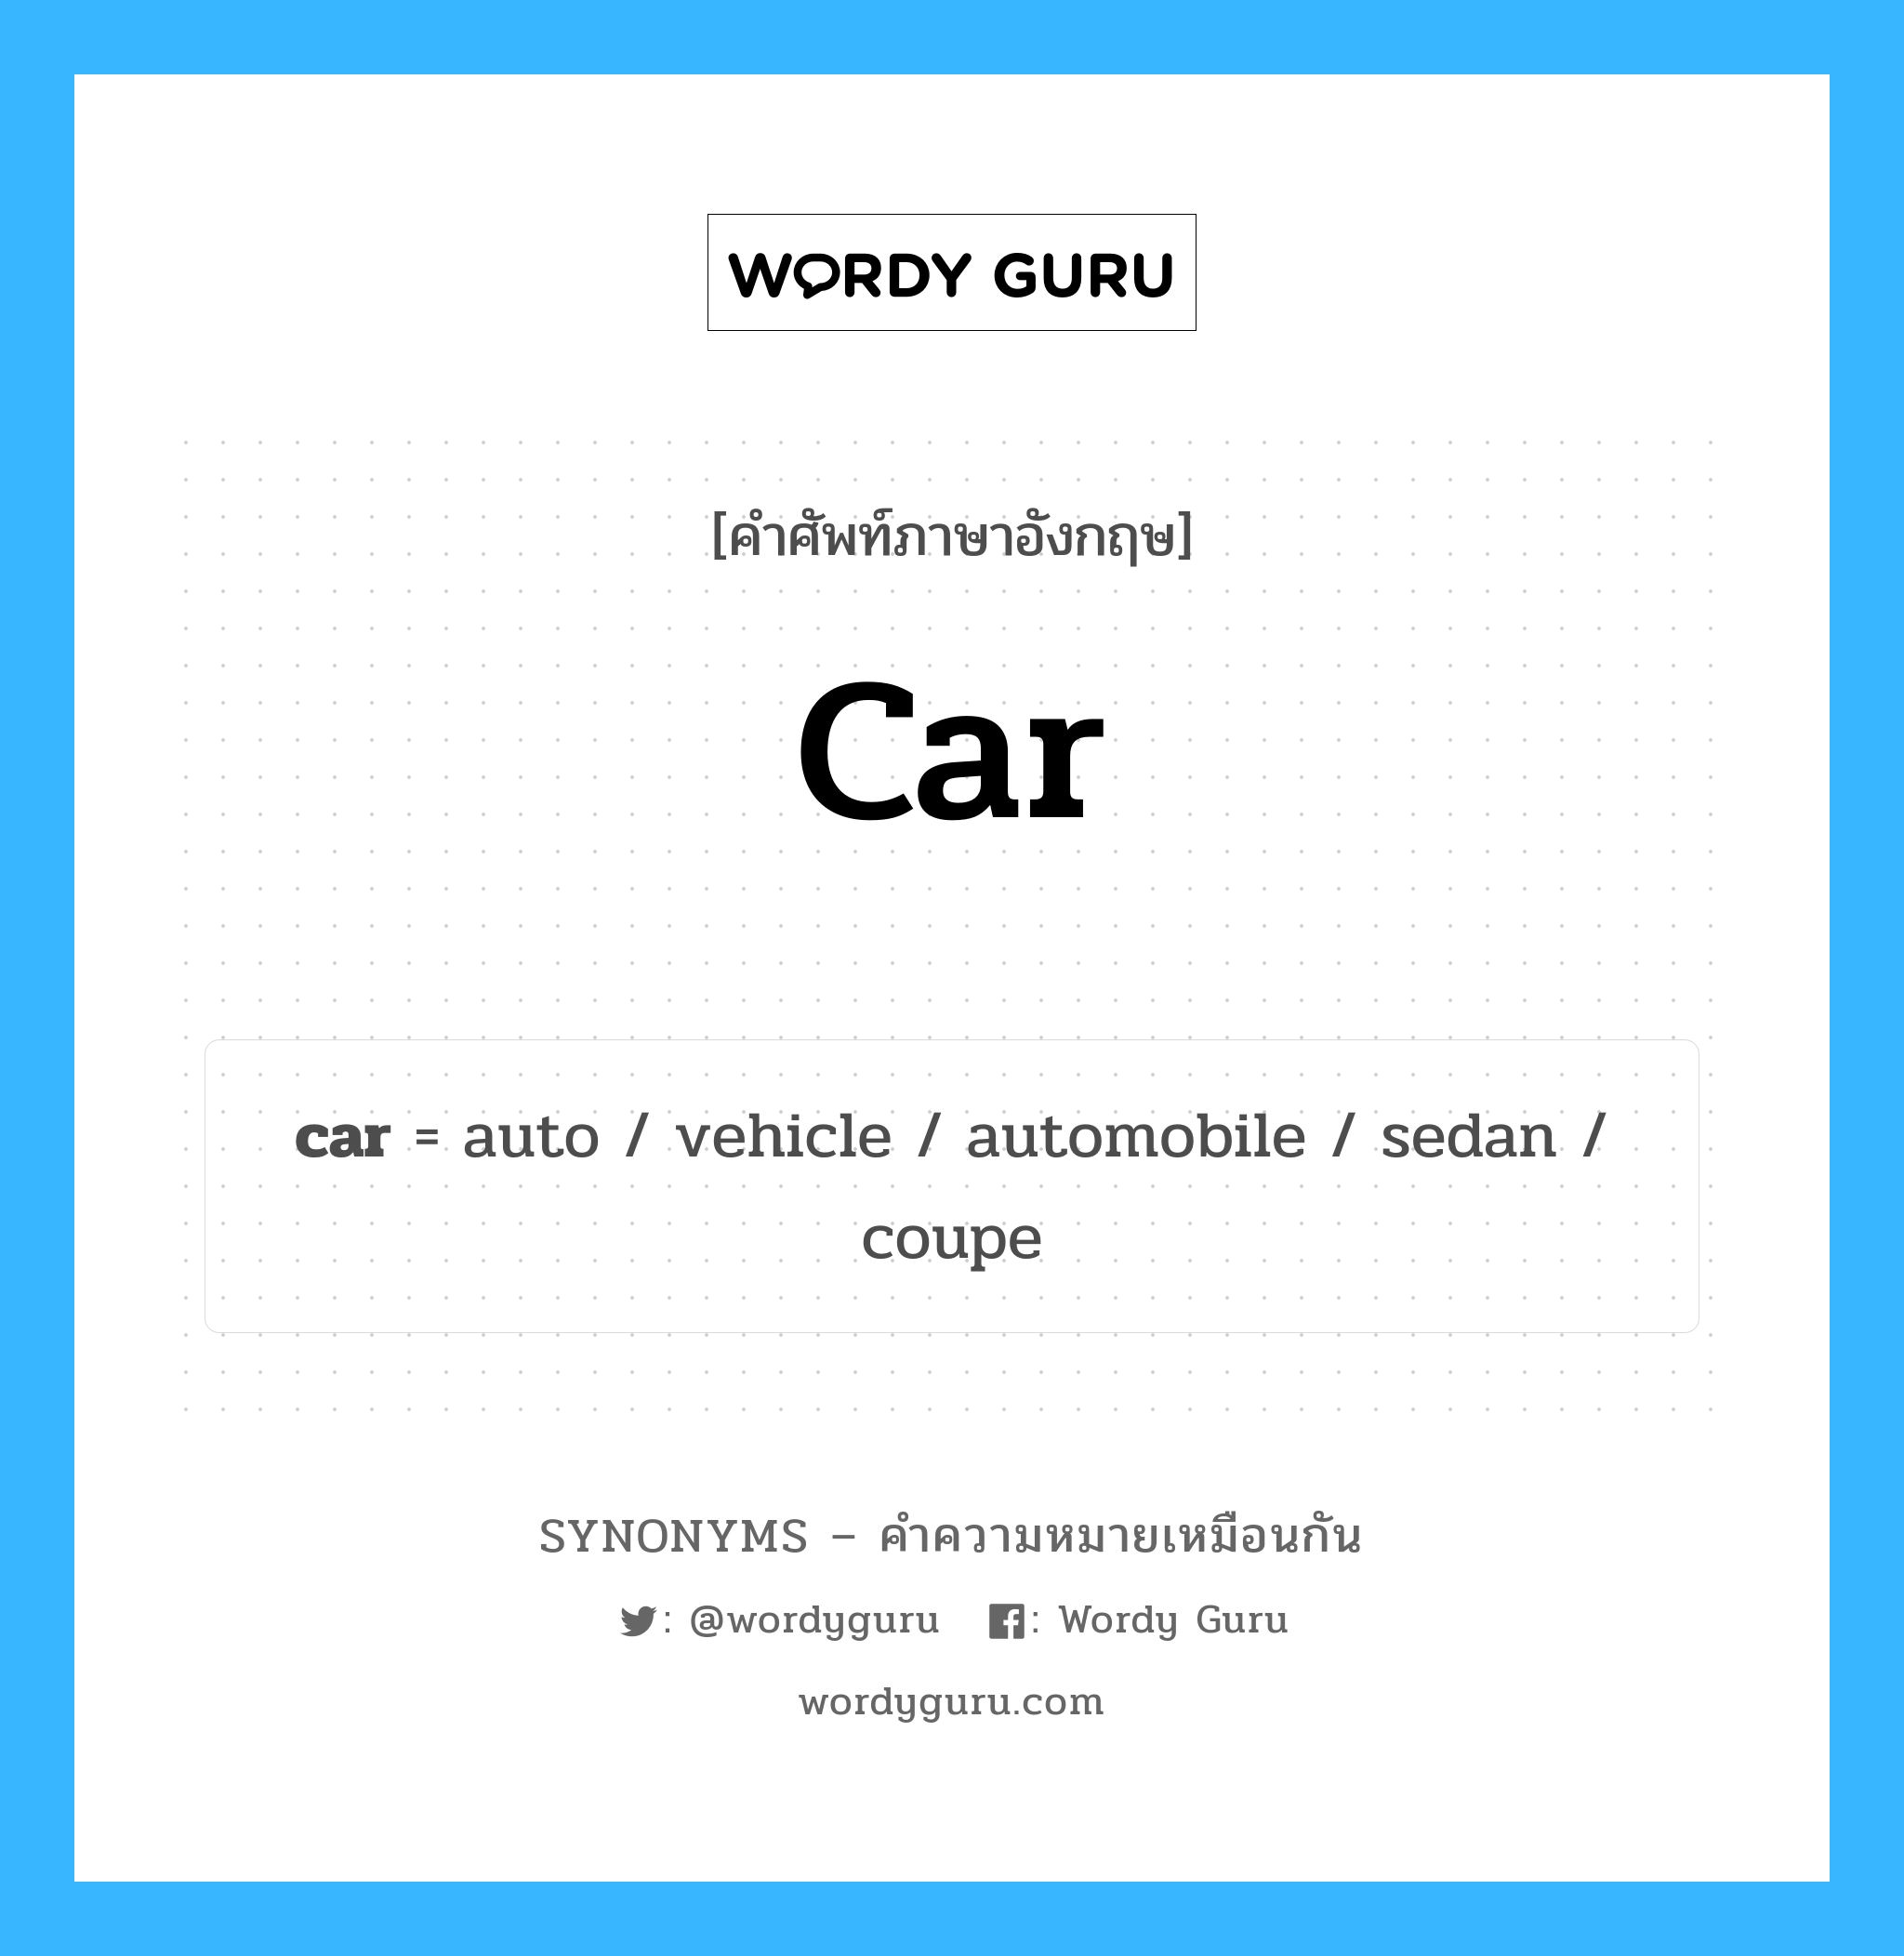 sedan เป็นหนึ่งใน car และมีคำอื่น ๆ อีกดังนี้, คำศัพท์ภาษาอังกฤษ sedan ความหมายคล้ายกันกับ car แปลว่า รถเก๋ง หมวด car